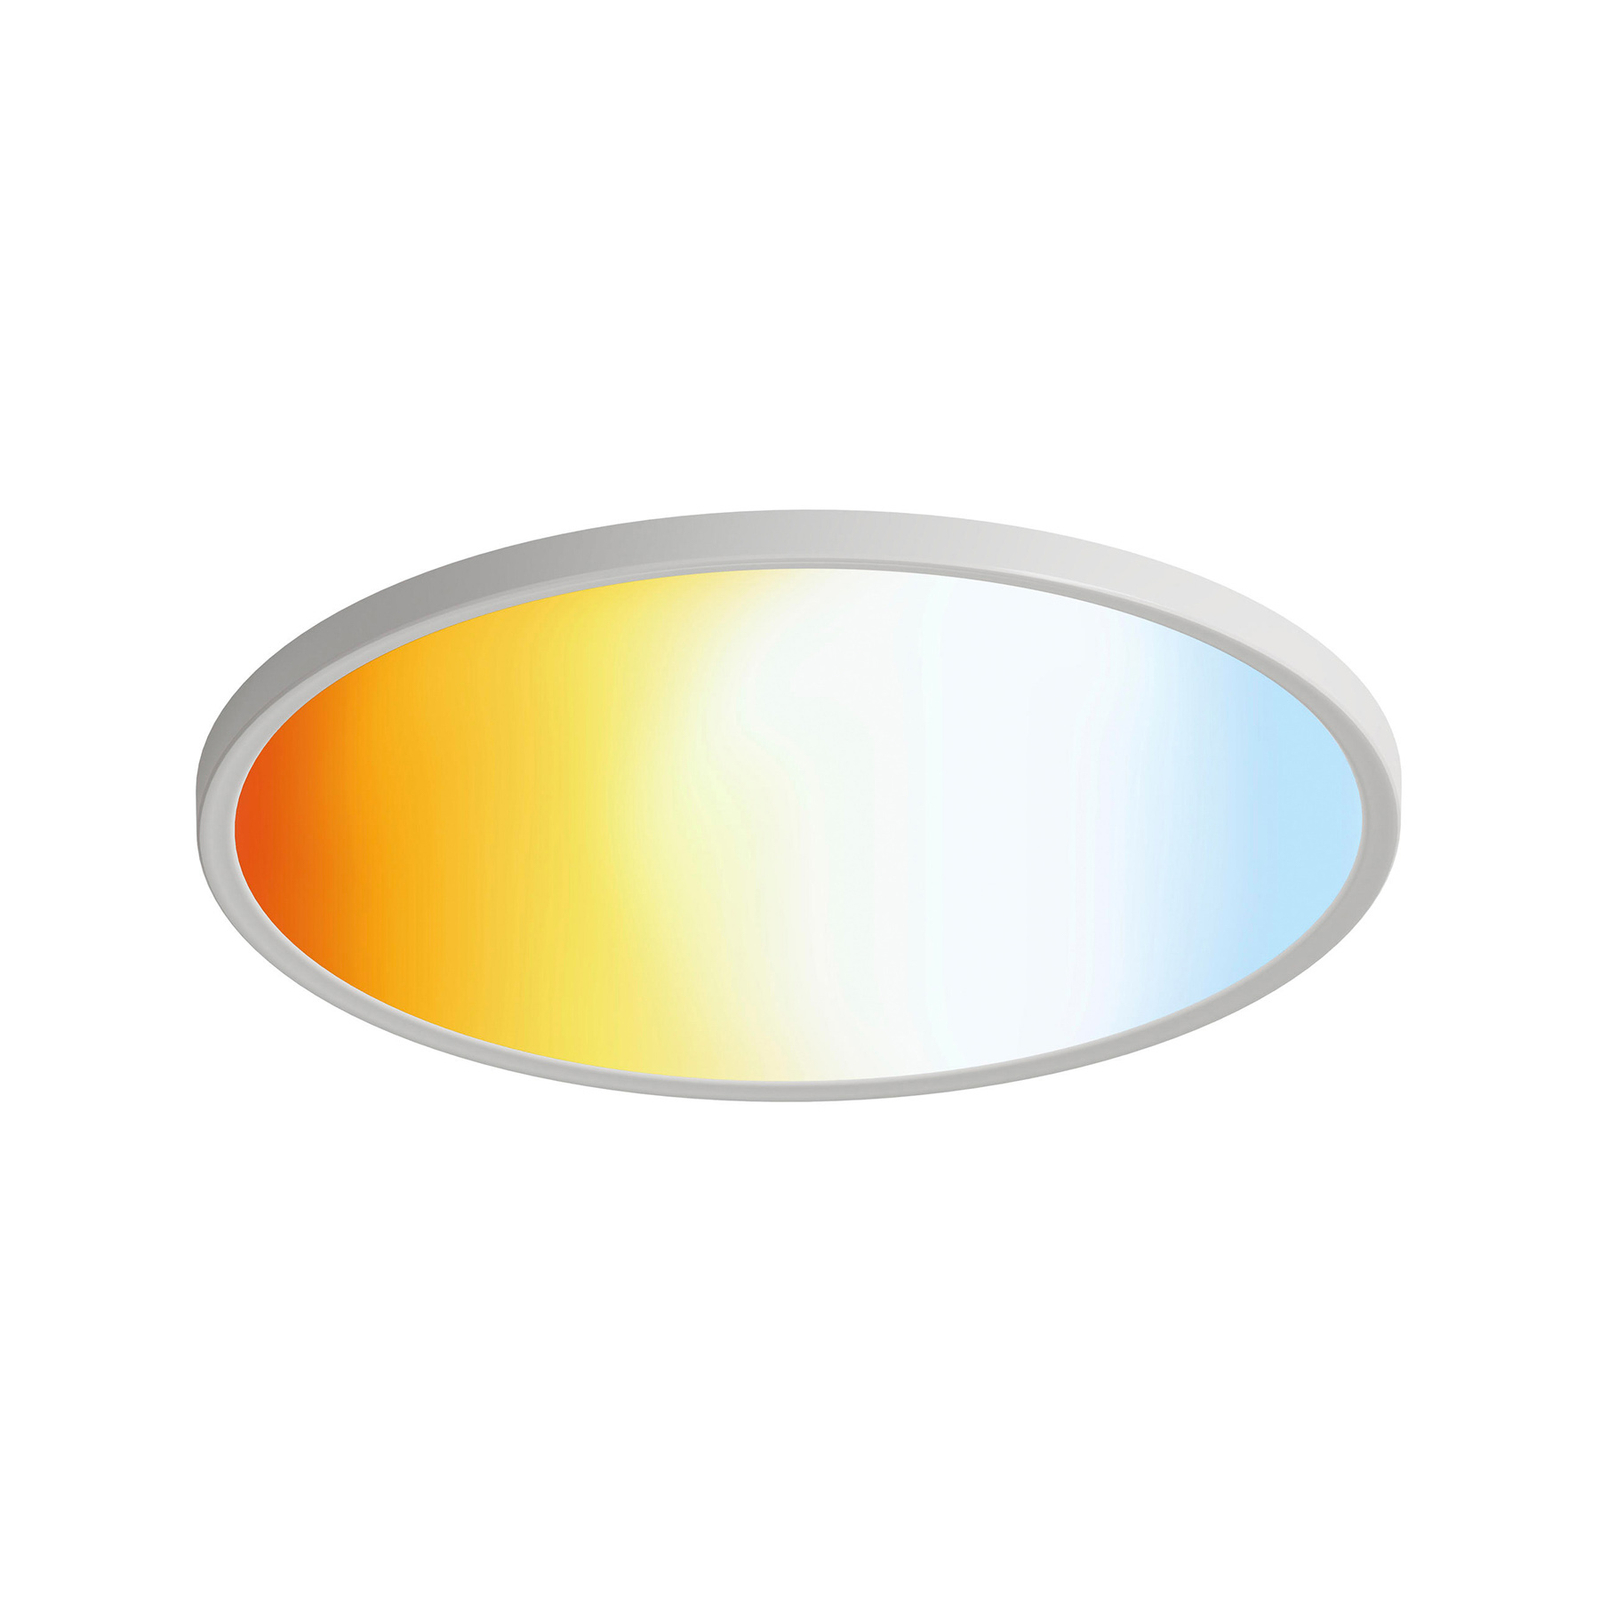 Müller Licht tint Smart LED-Deckenleuchte Amela, Ø 42 cm